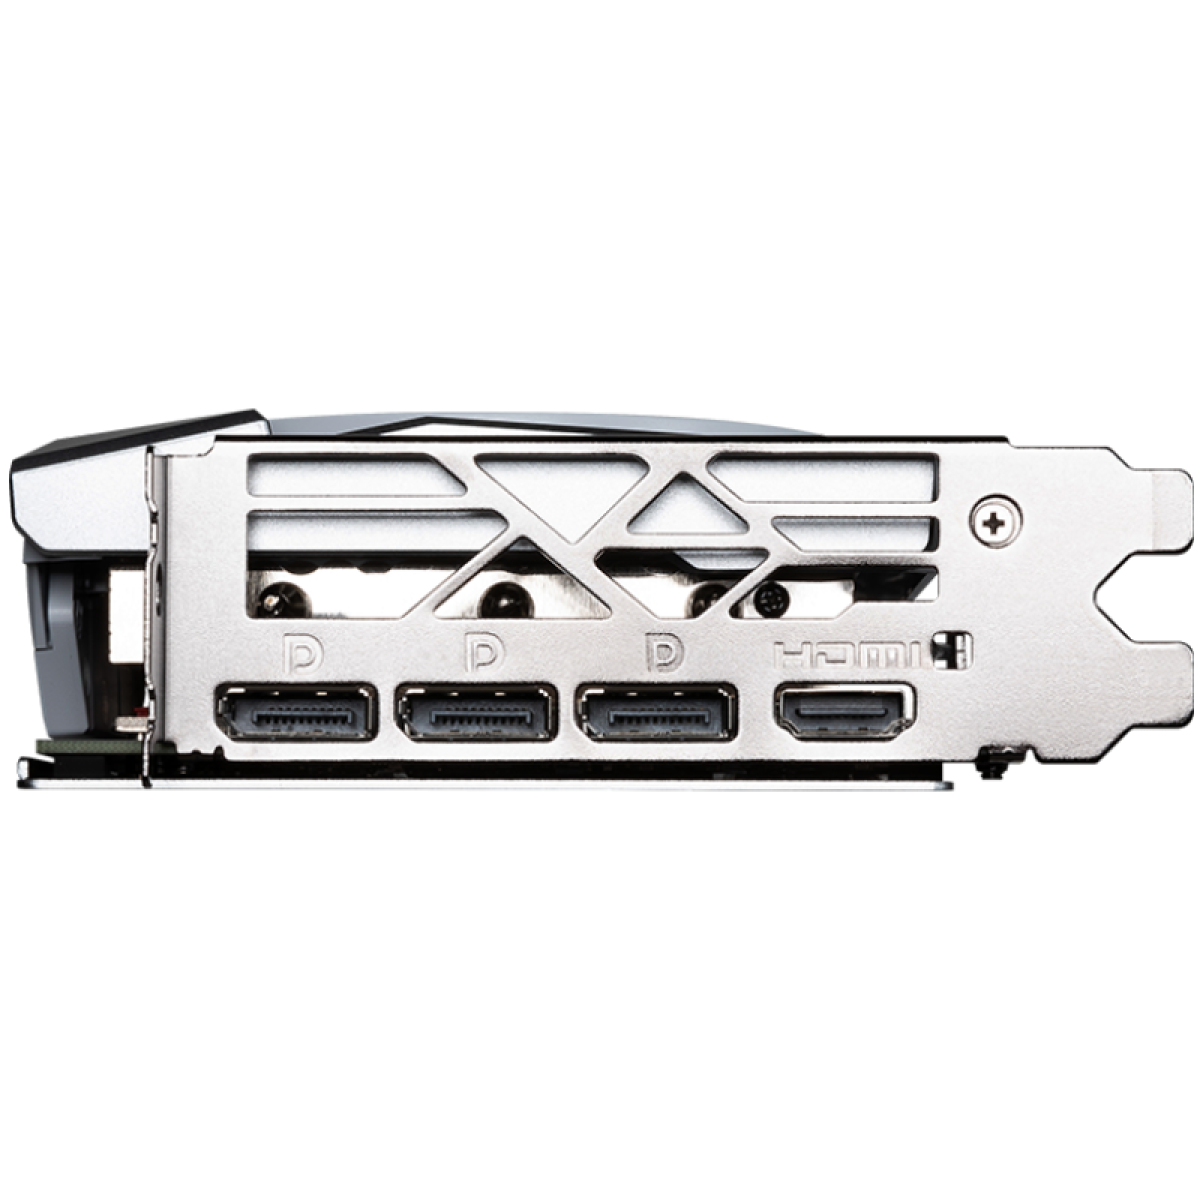 GeForce RTX 4070 Gaming X Slim White 12GB GDDR6X